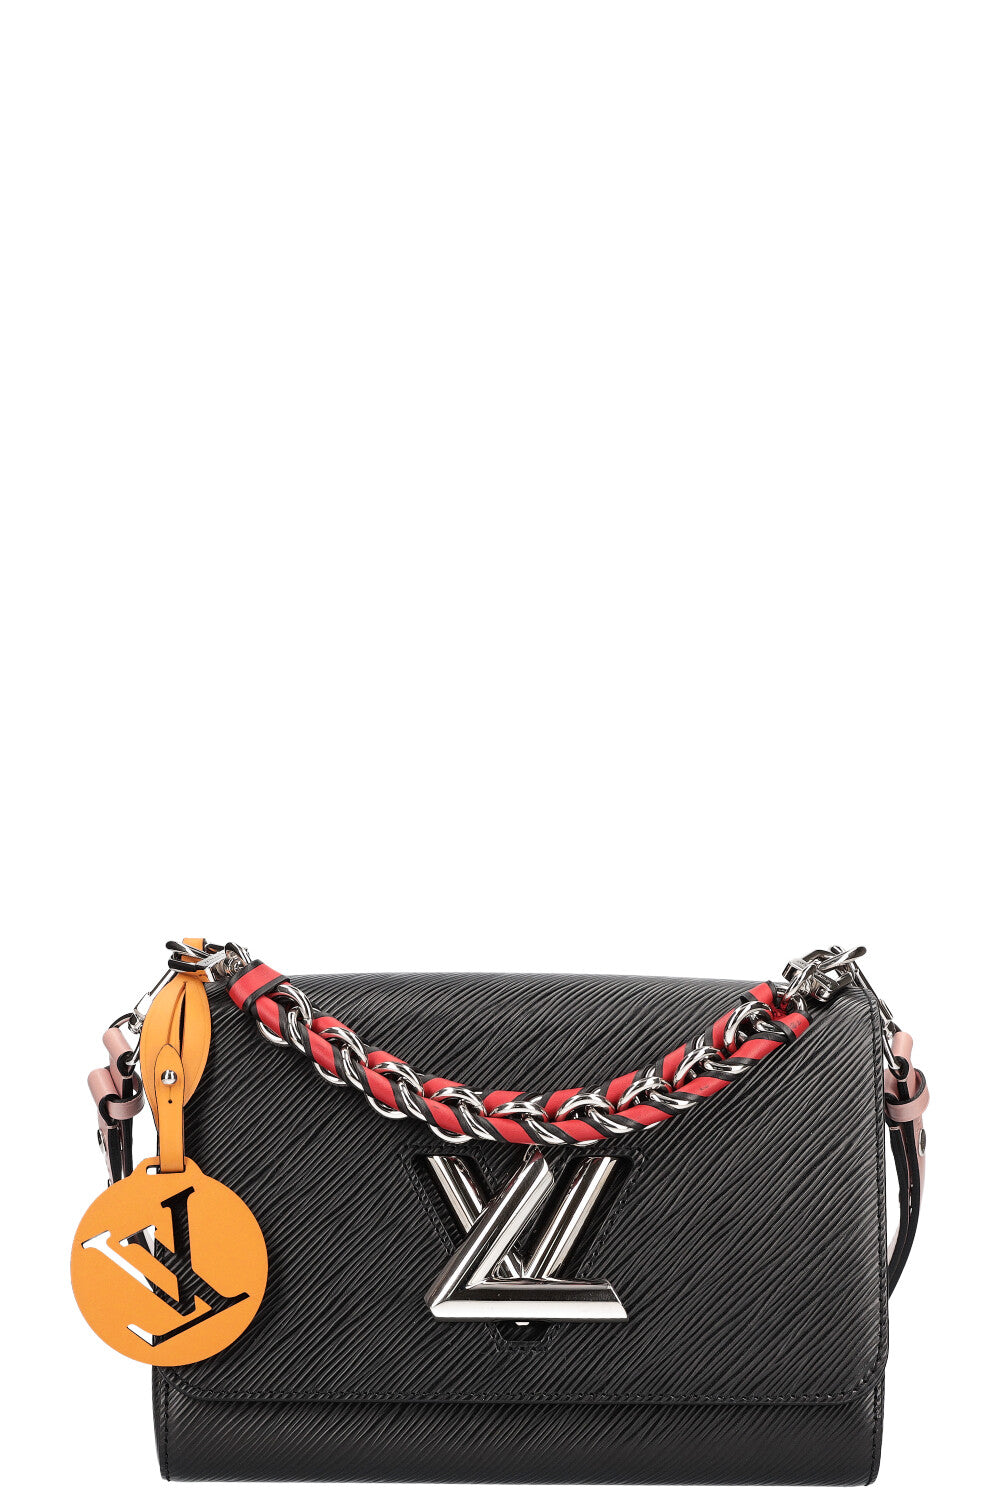 Twist MM Epi Leather - Handbags M22774